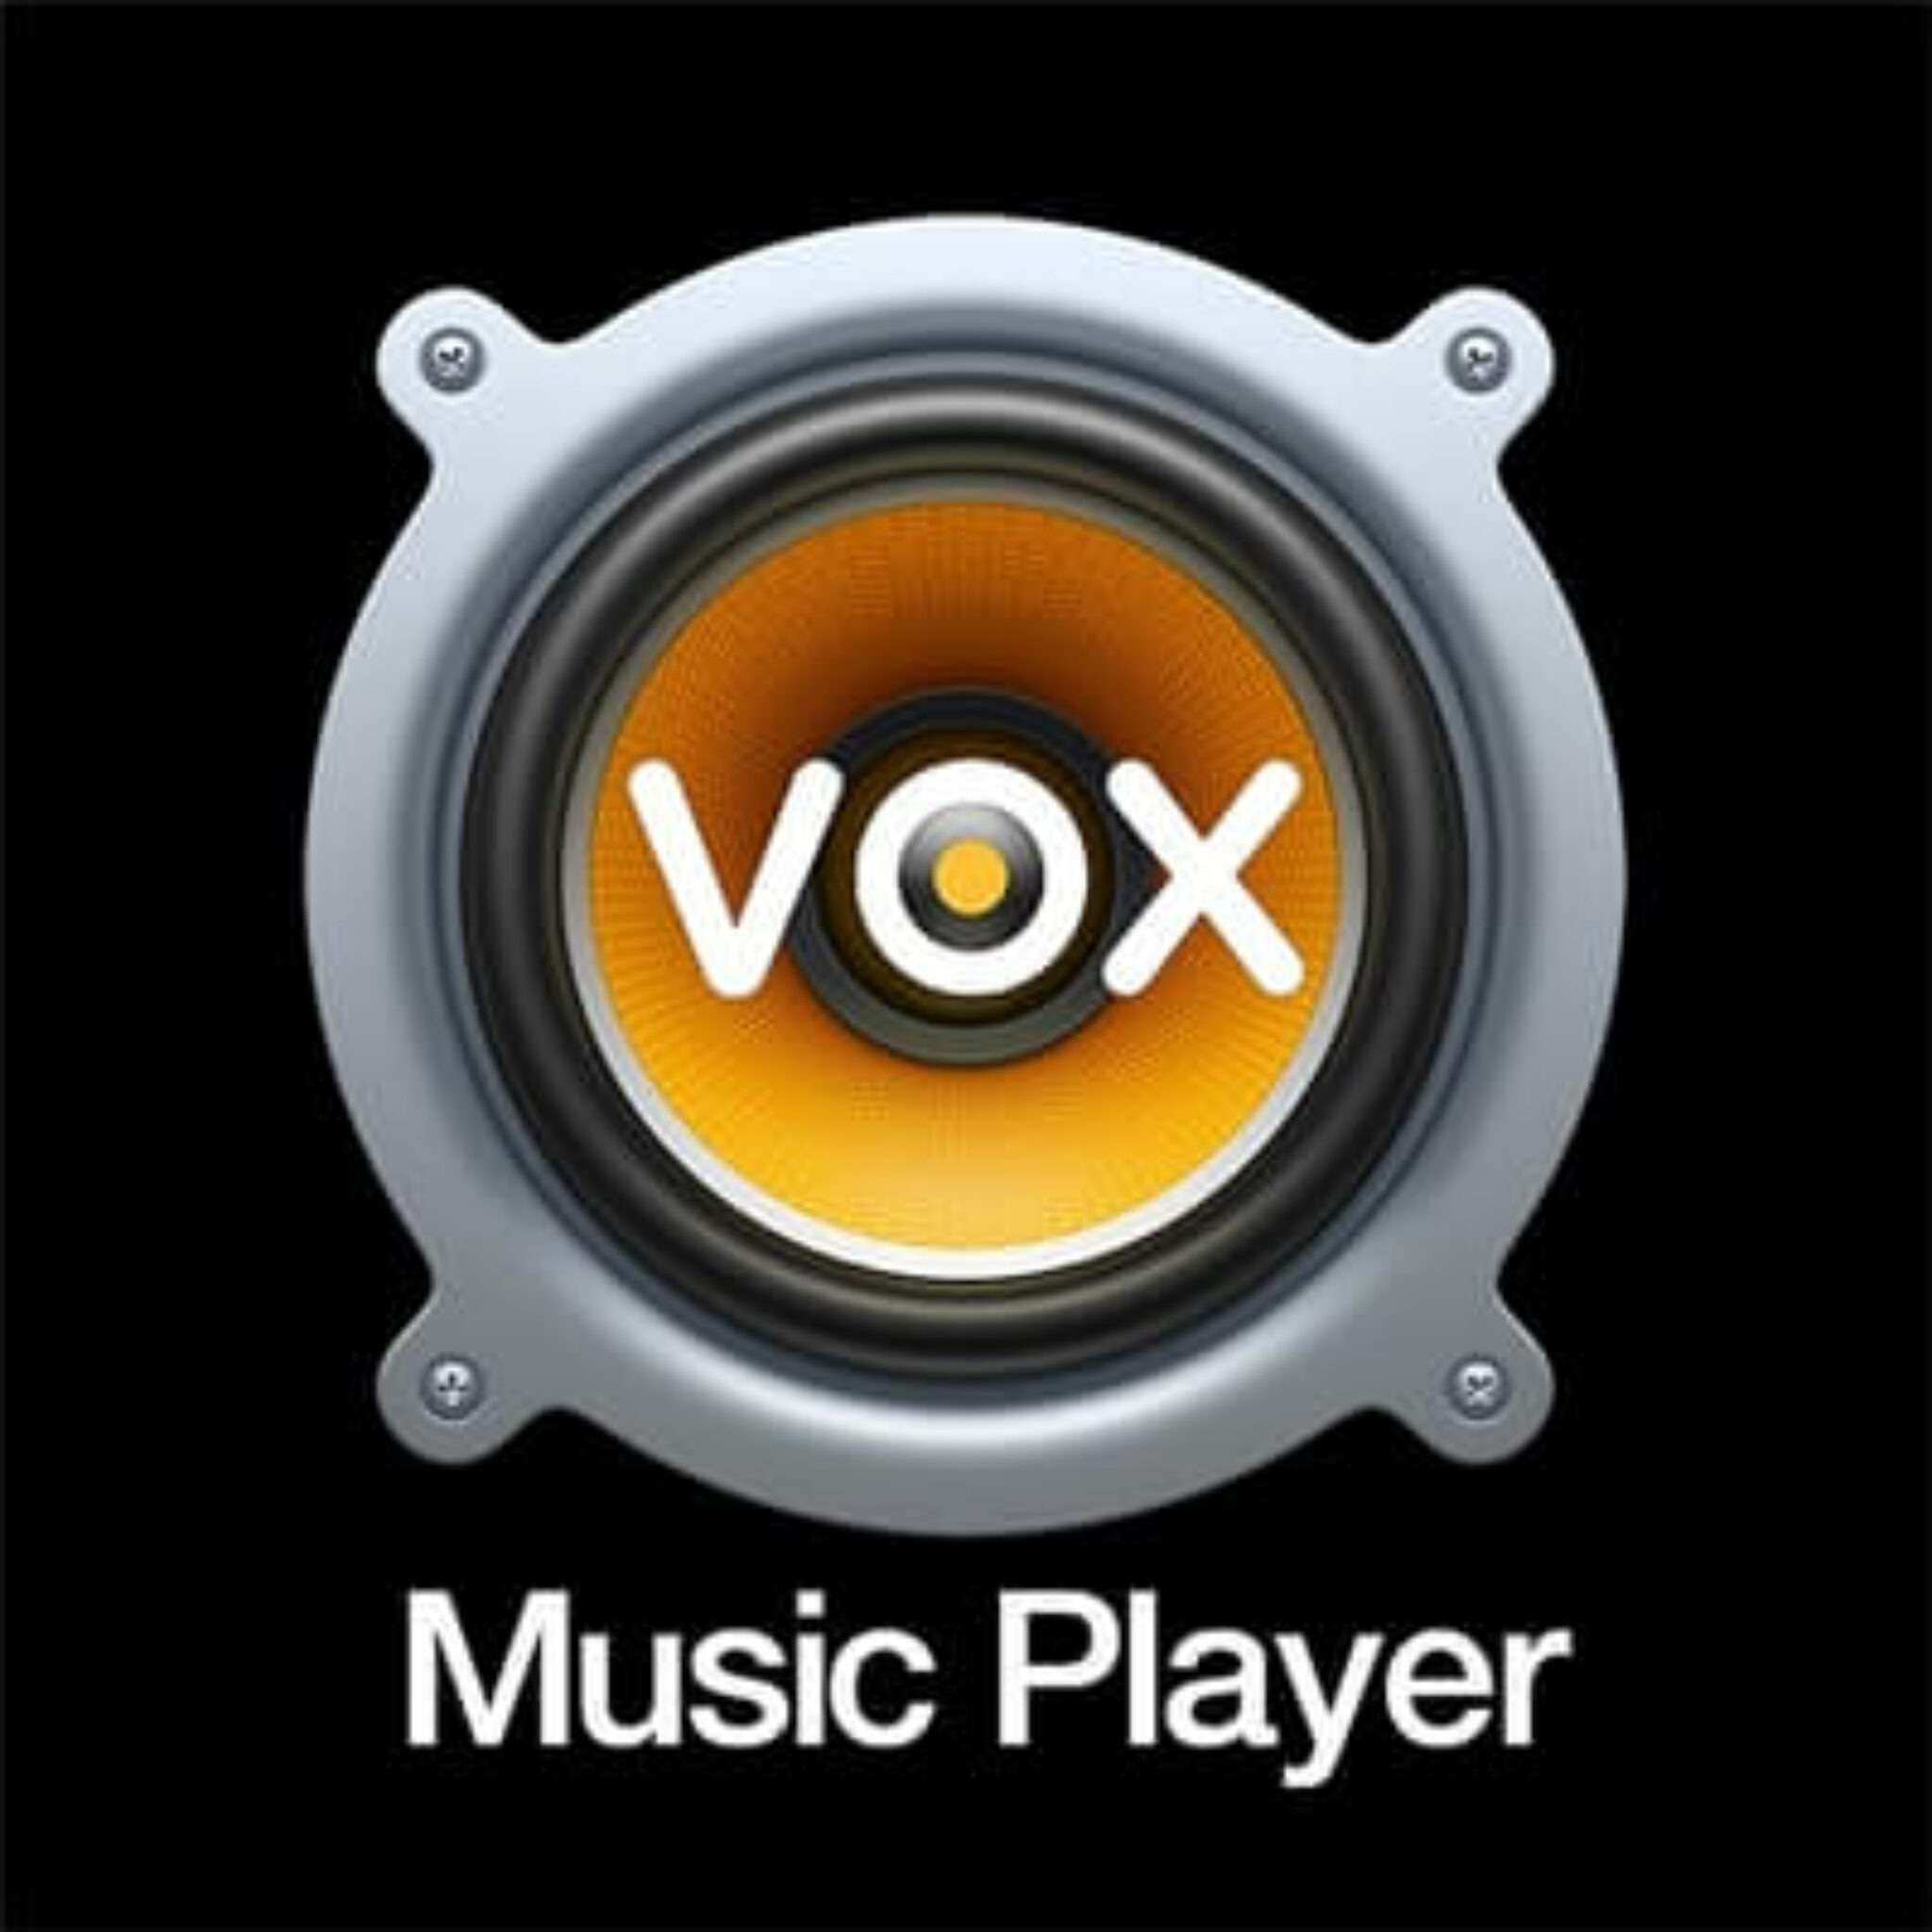 vox music player